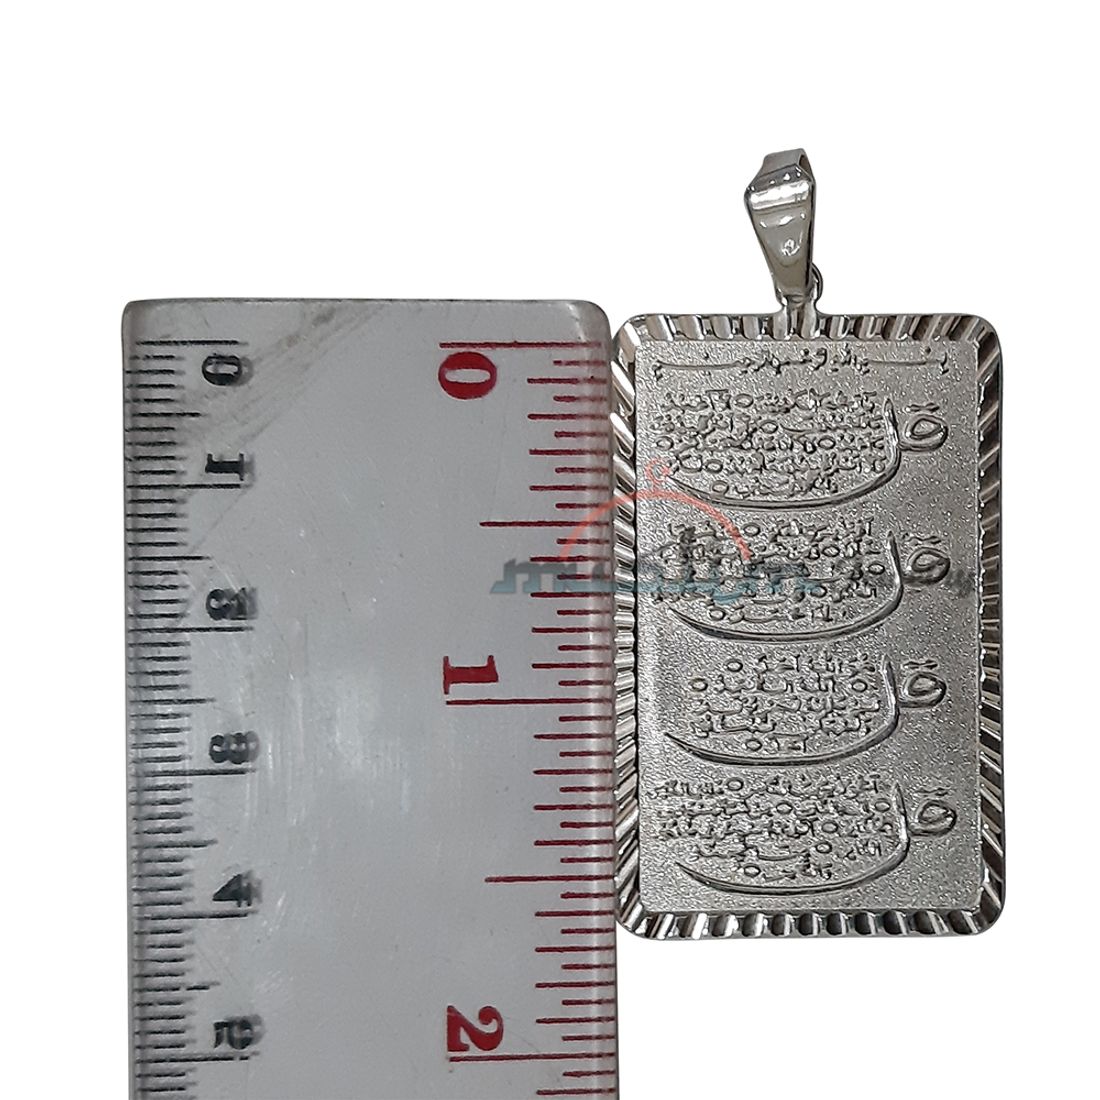 Silver Rectangle Shiny Islamic 4 Qul Surah Quran Pendant